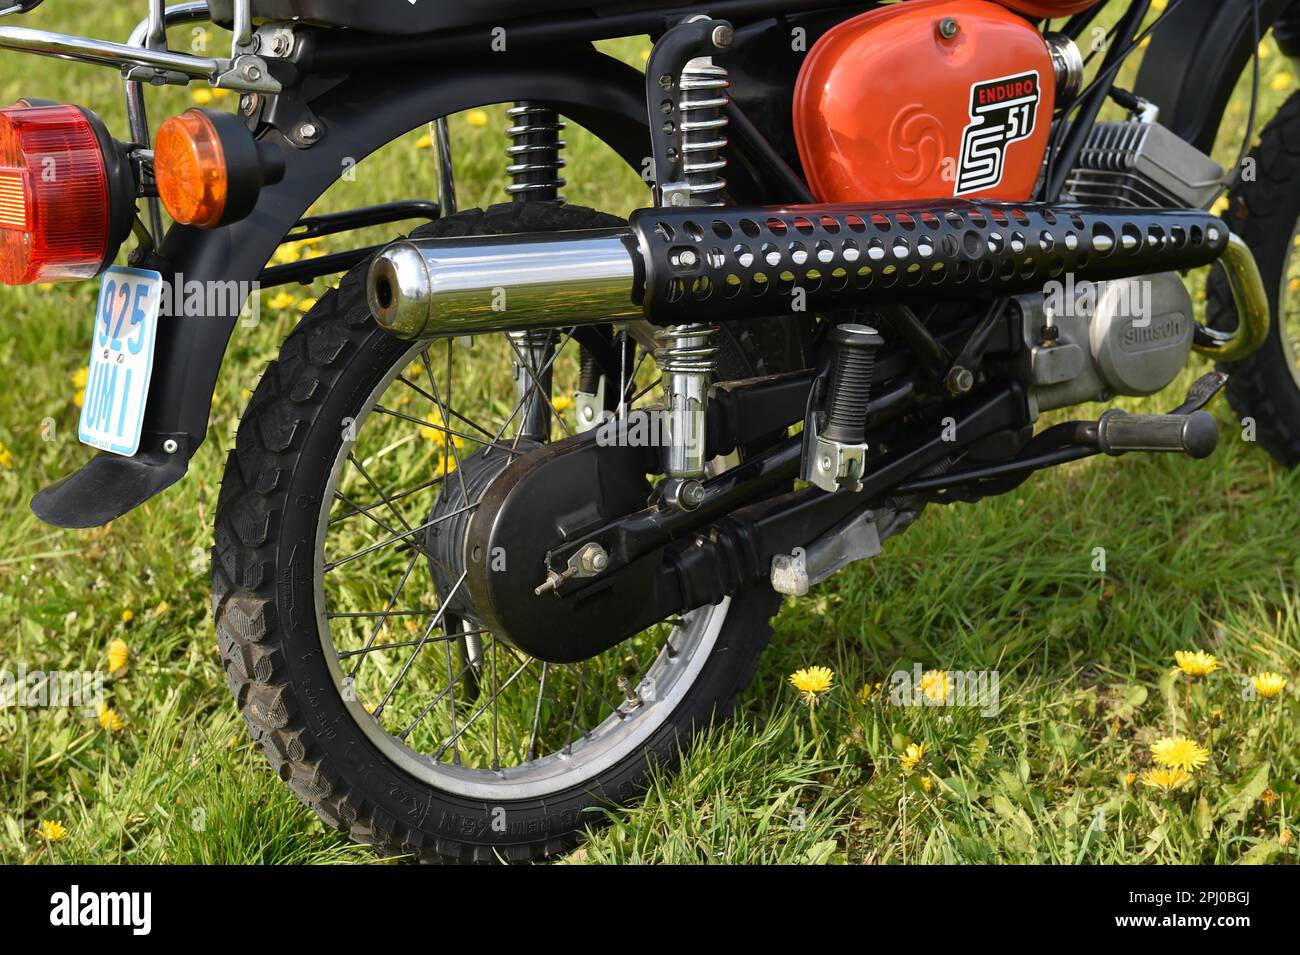 Oldtimer, DDR Moped, Mokick Simson Enduro S 51, Suhl, Thuringia, Germany  Stock Photo - Alamy